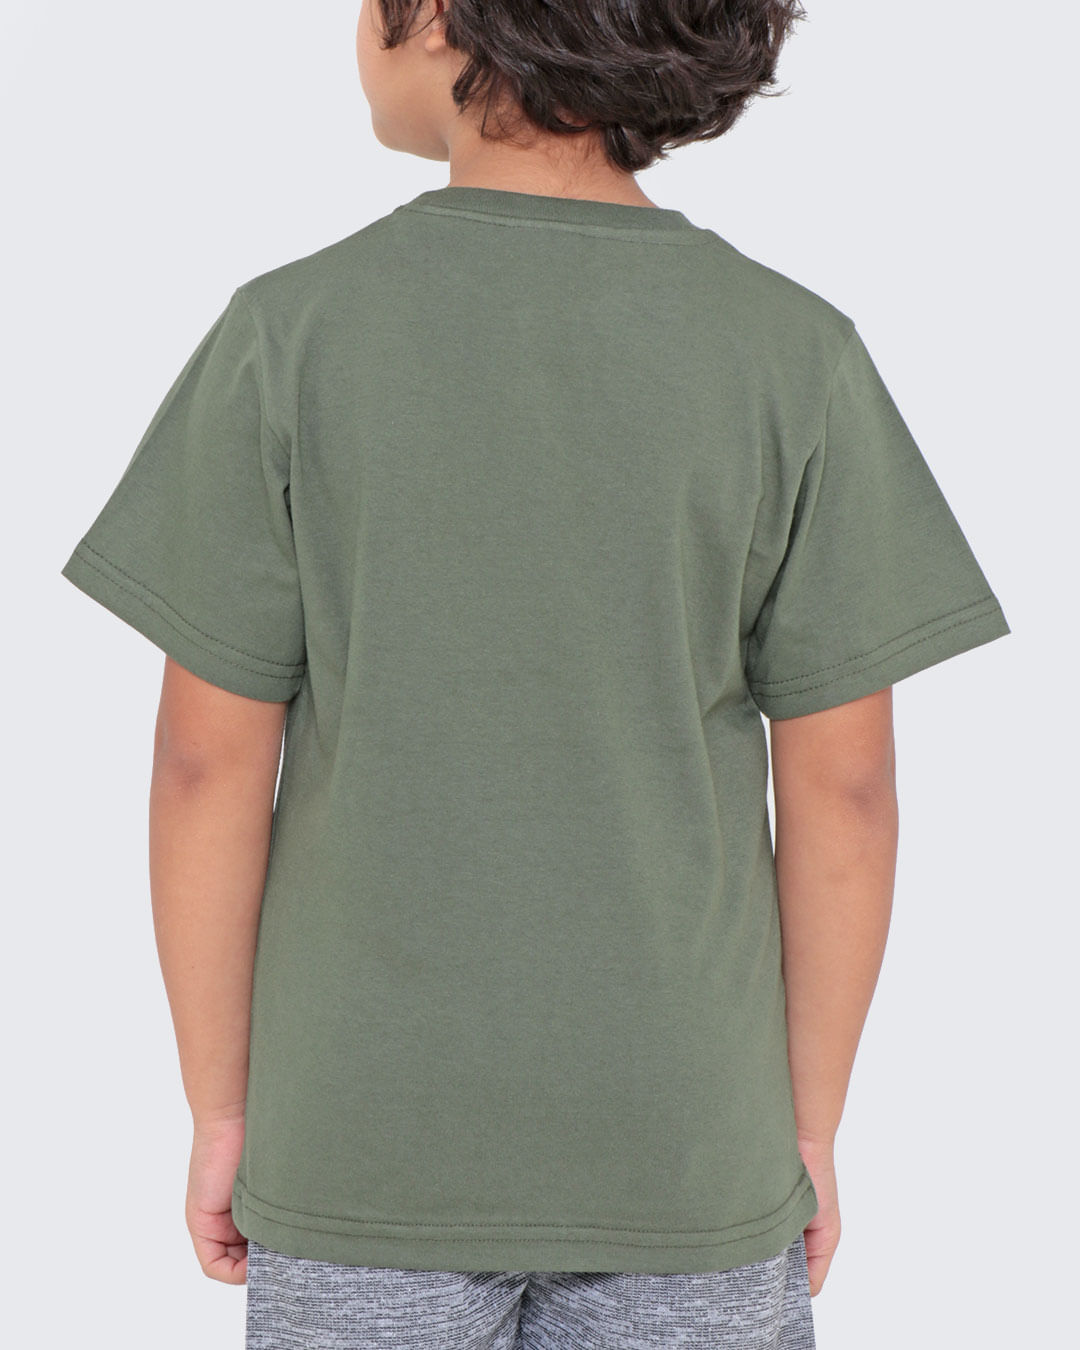 Camiseta-Infantil-Estampa-NYC-Verde-Escuro